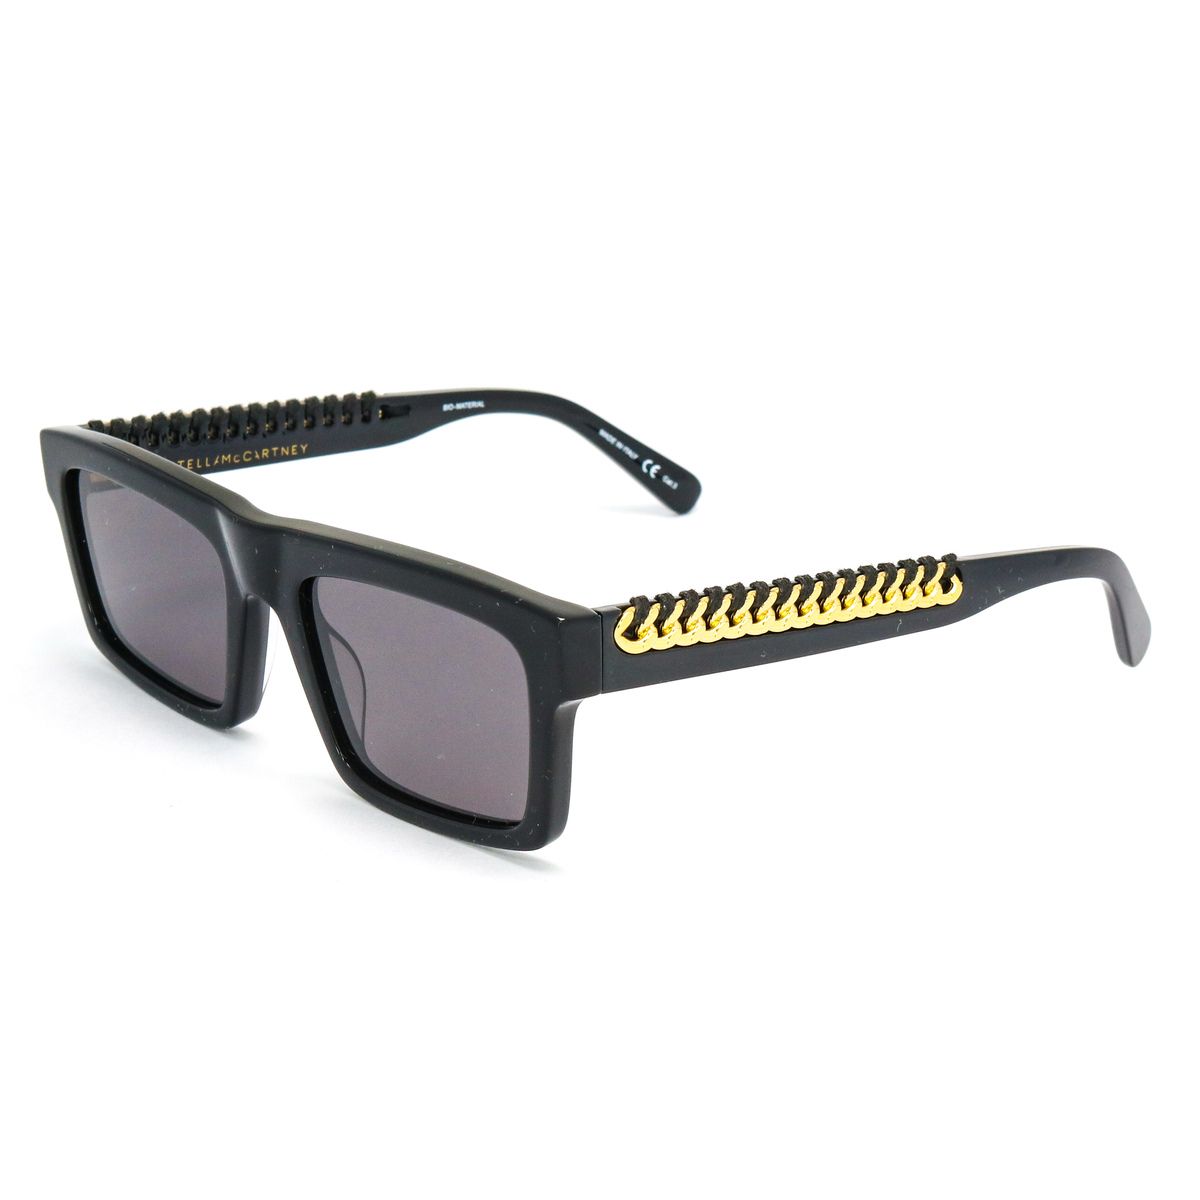 SC0208S Cat Eye Sunglasses 1 - size 53